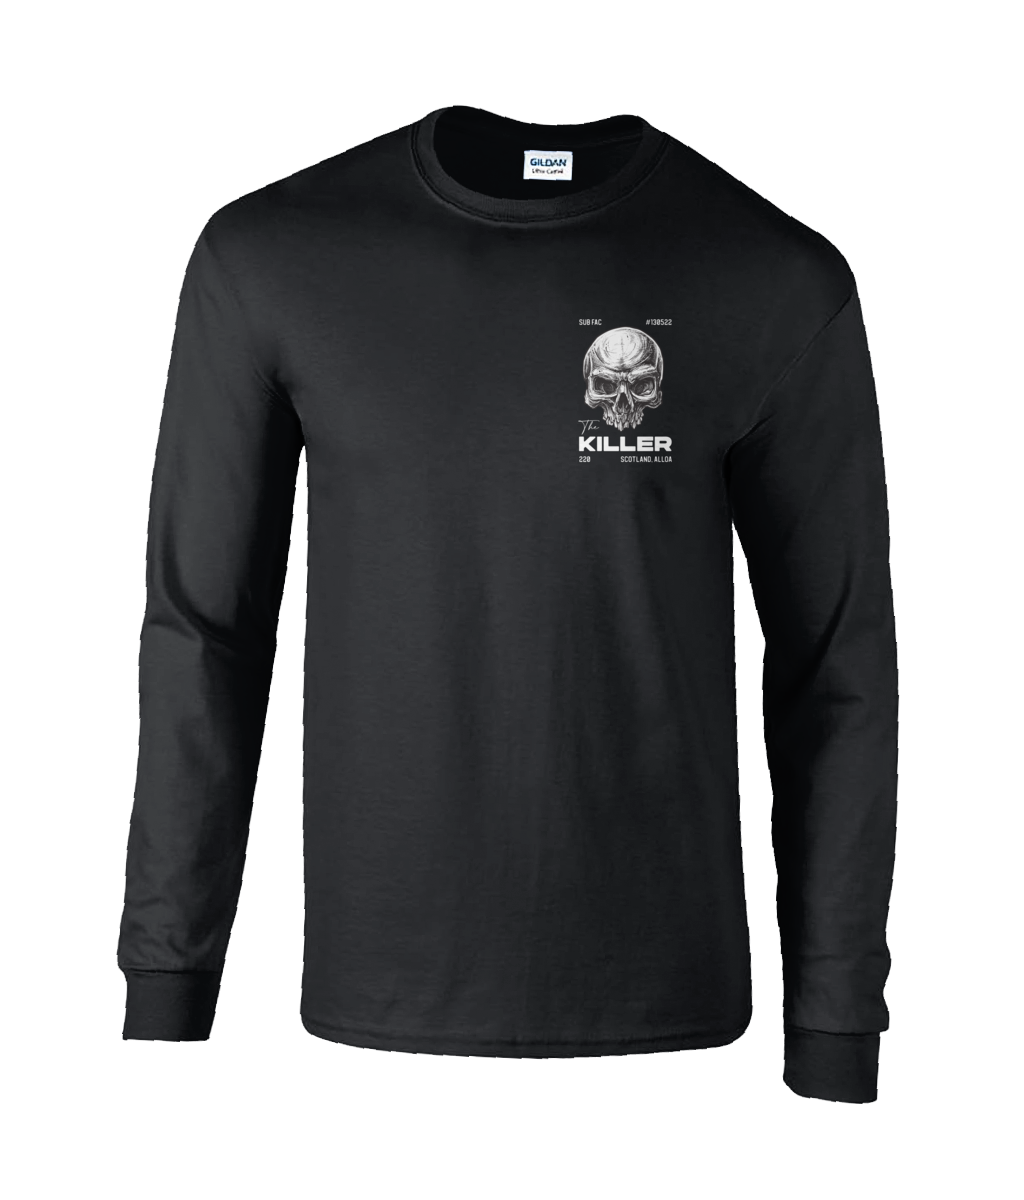 The Killer Long Sleeve T-Shirt (Black